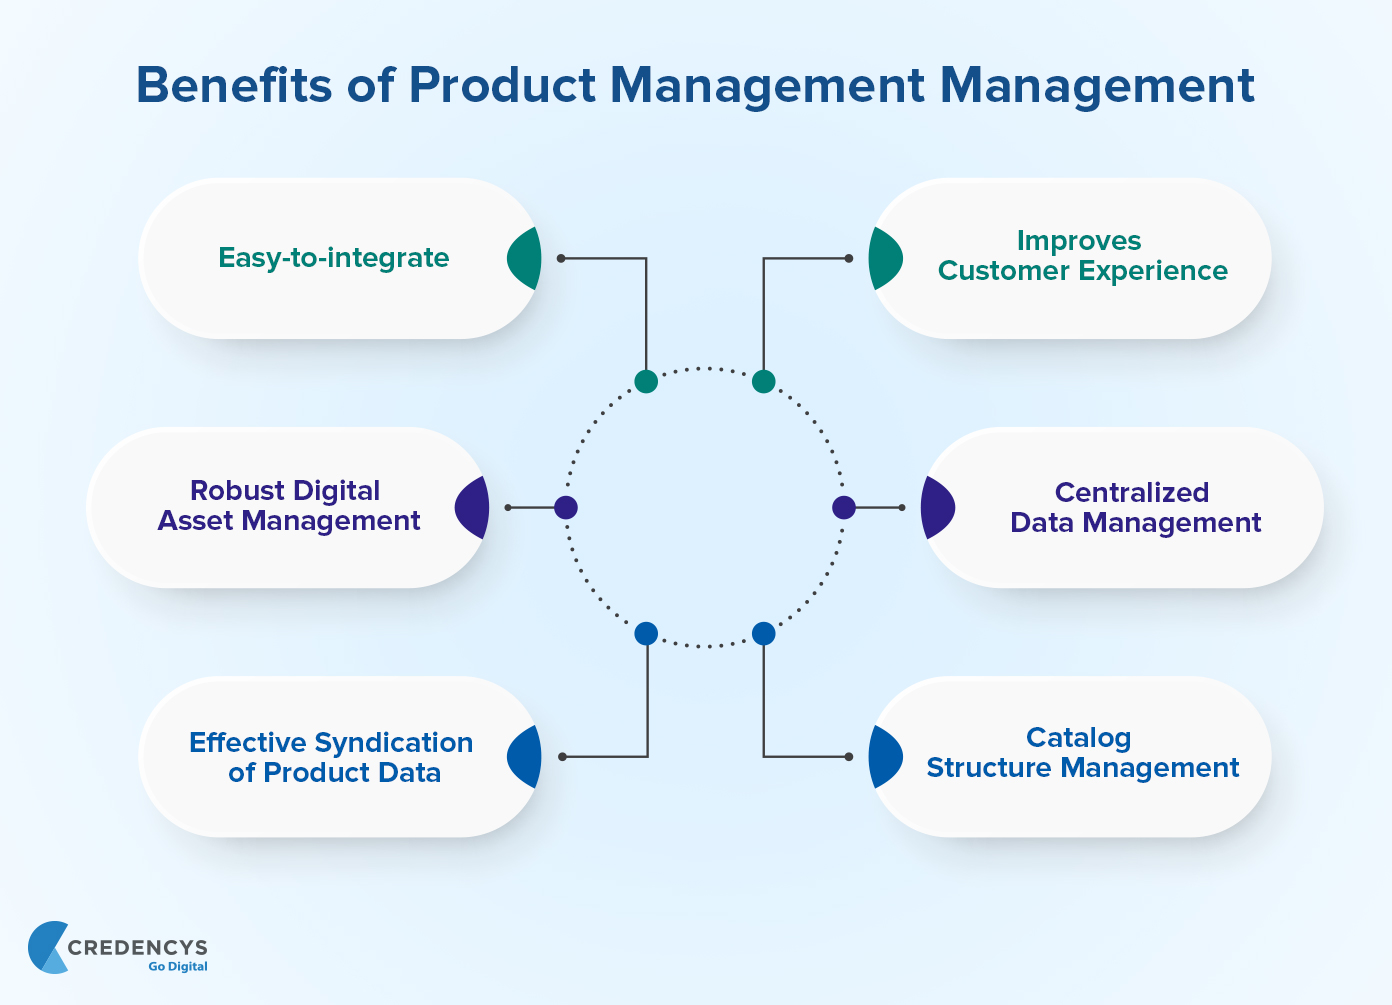 Benefits of Product Management Management